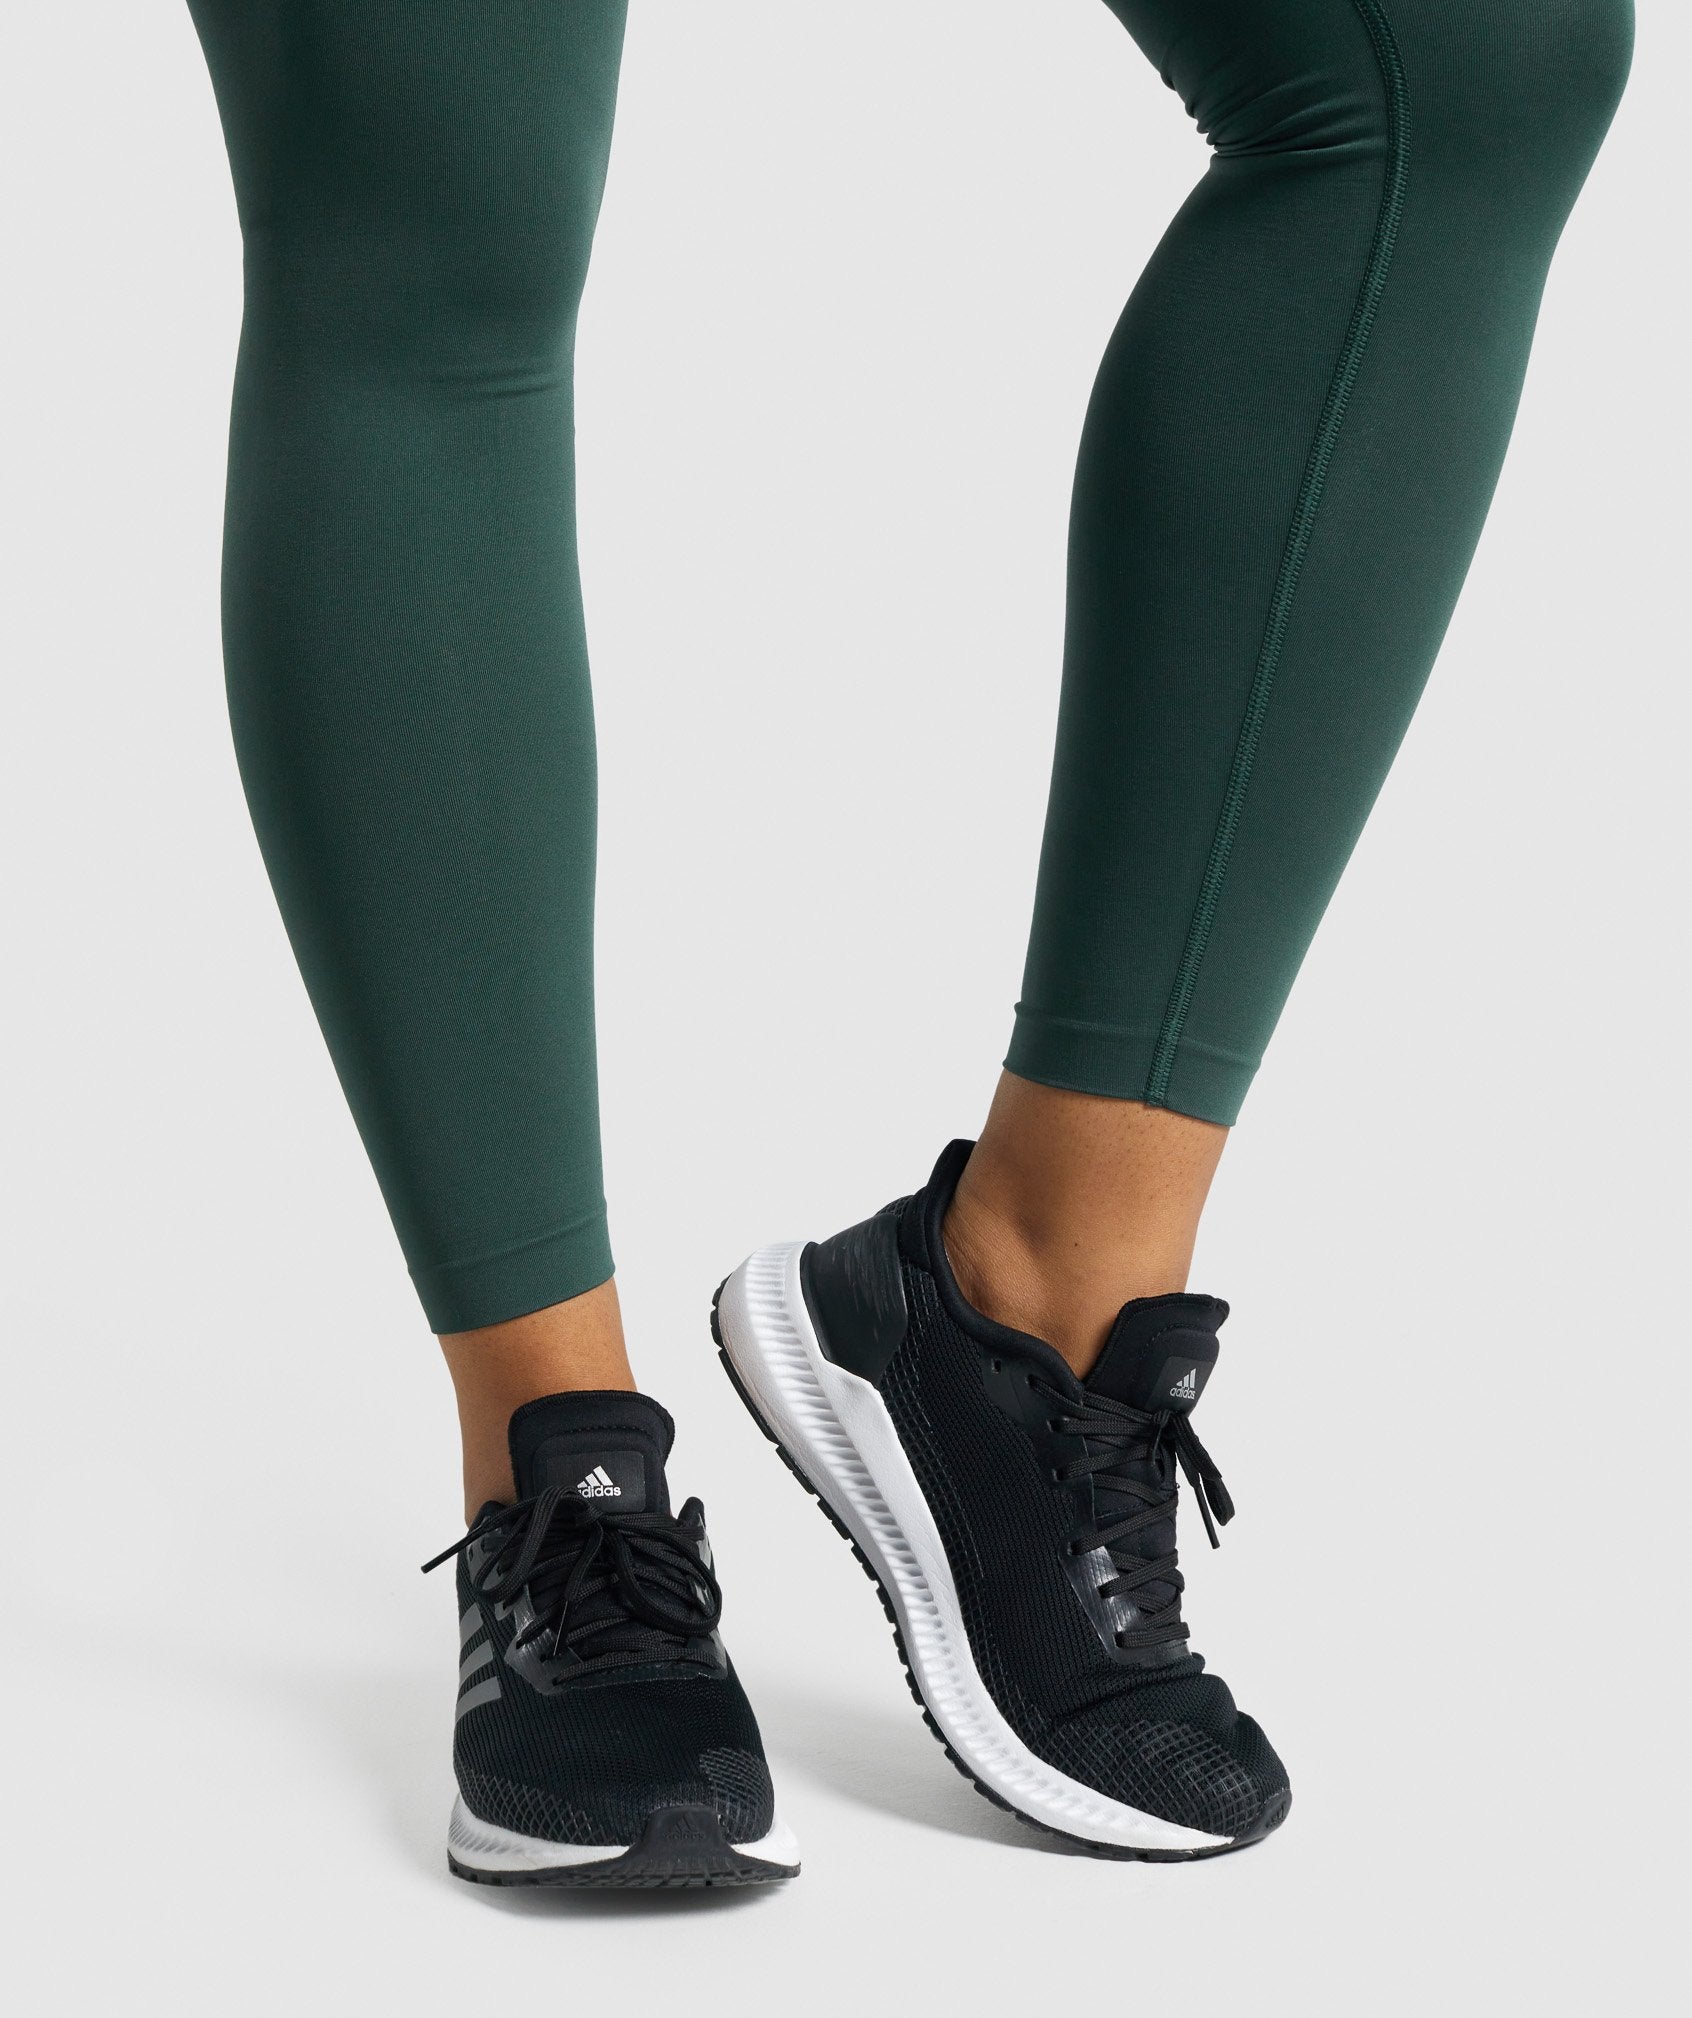 Buy the Gym Shark Women Green Activewear Leggings XS